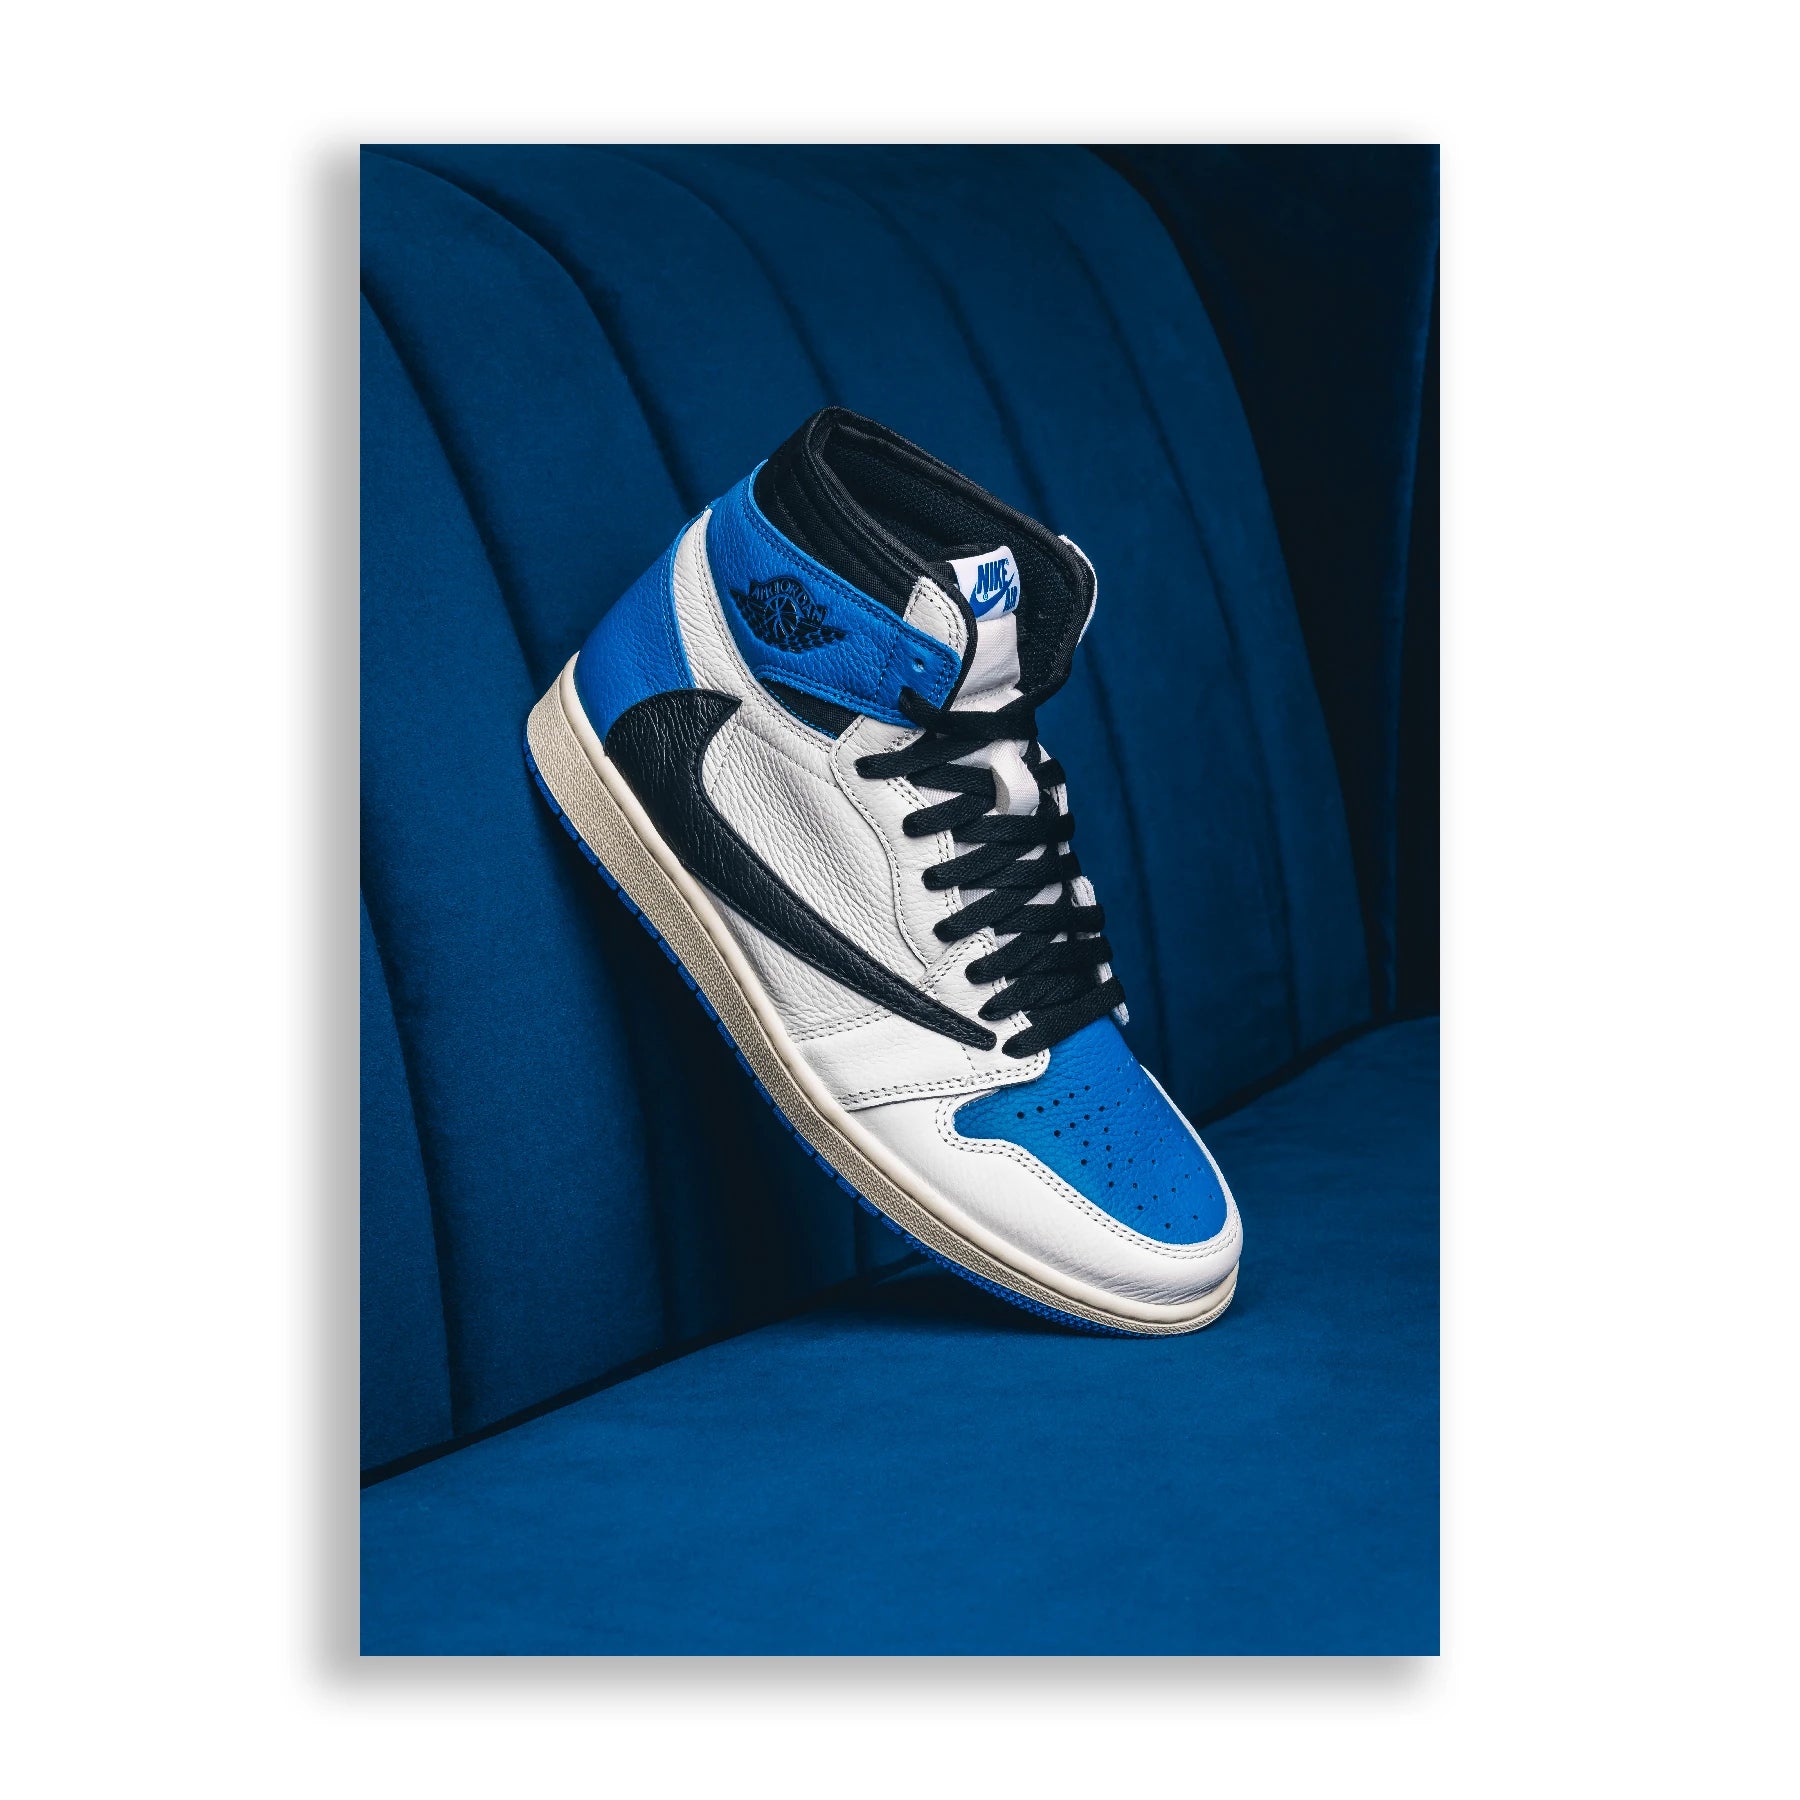 Travis Scott x fragment design x Nike Air Jordan 1 High